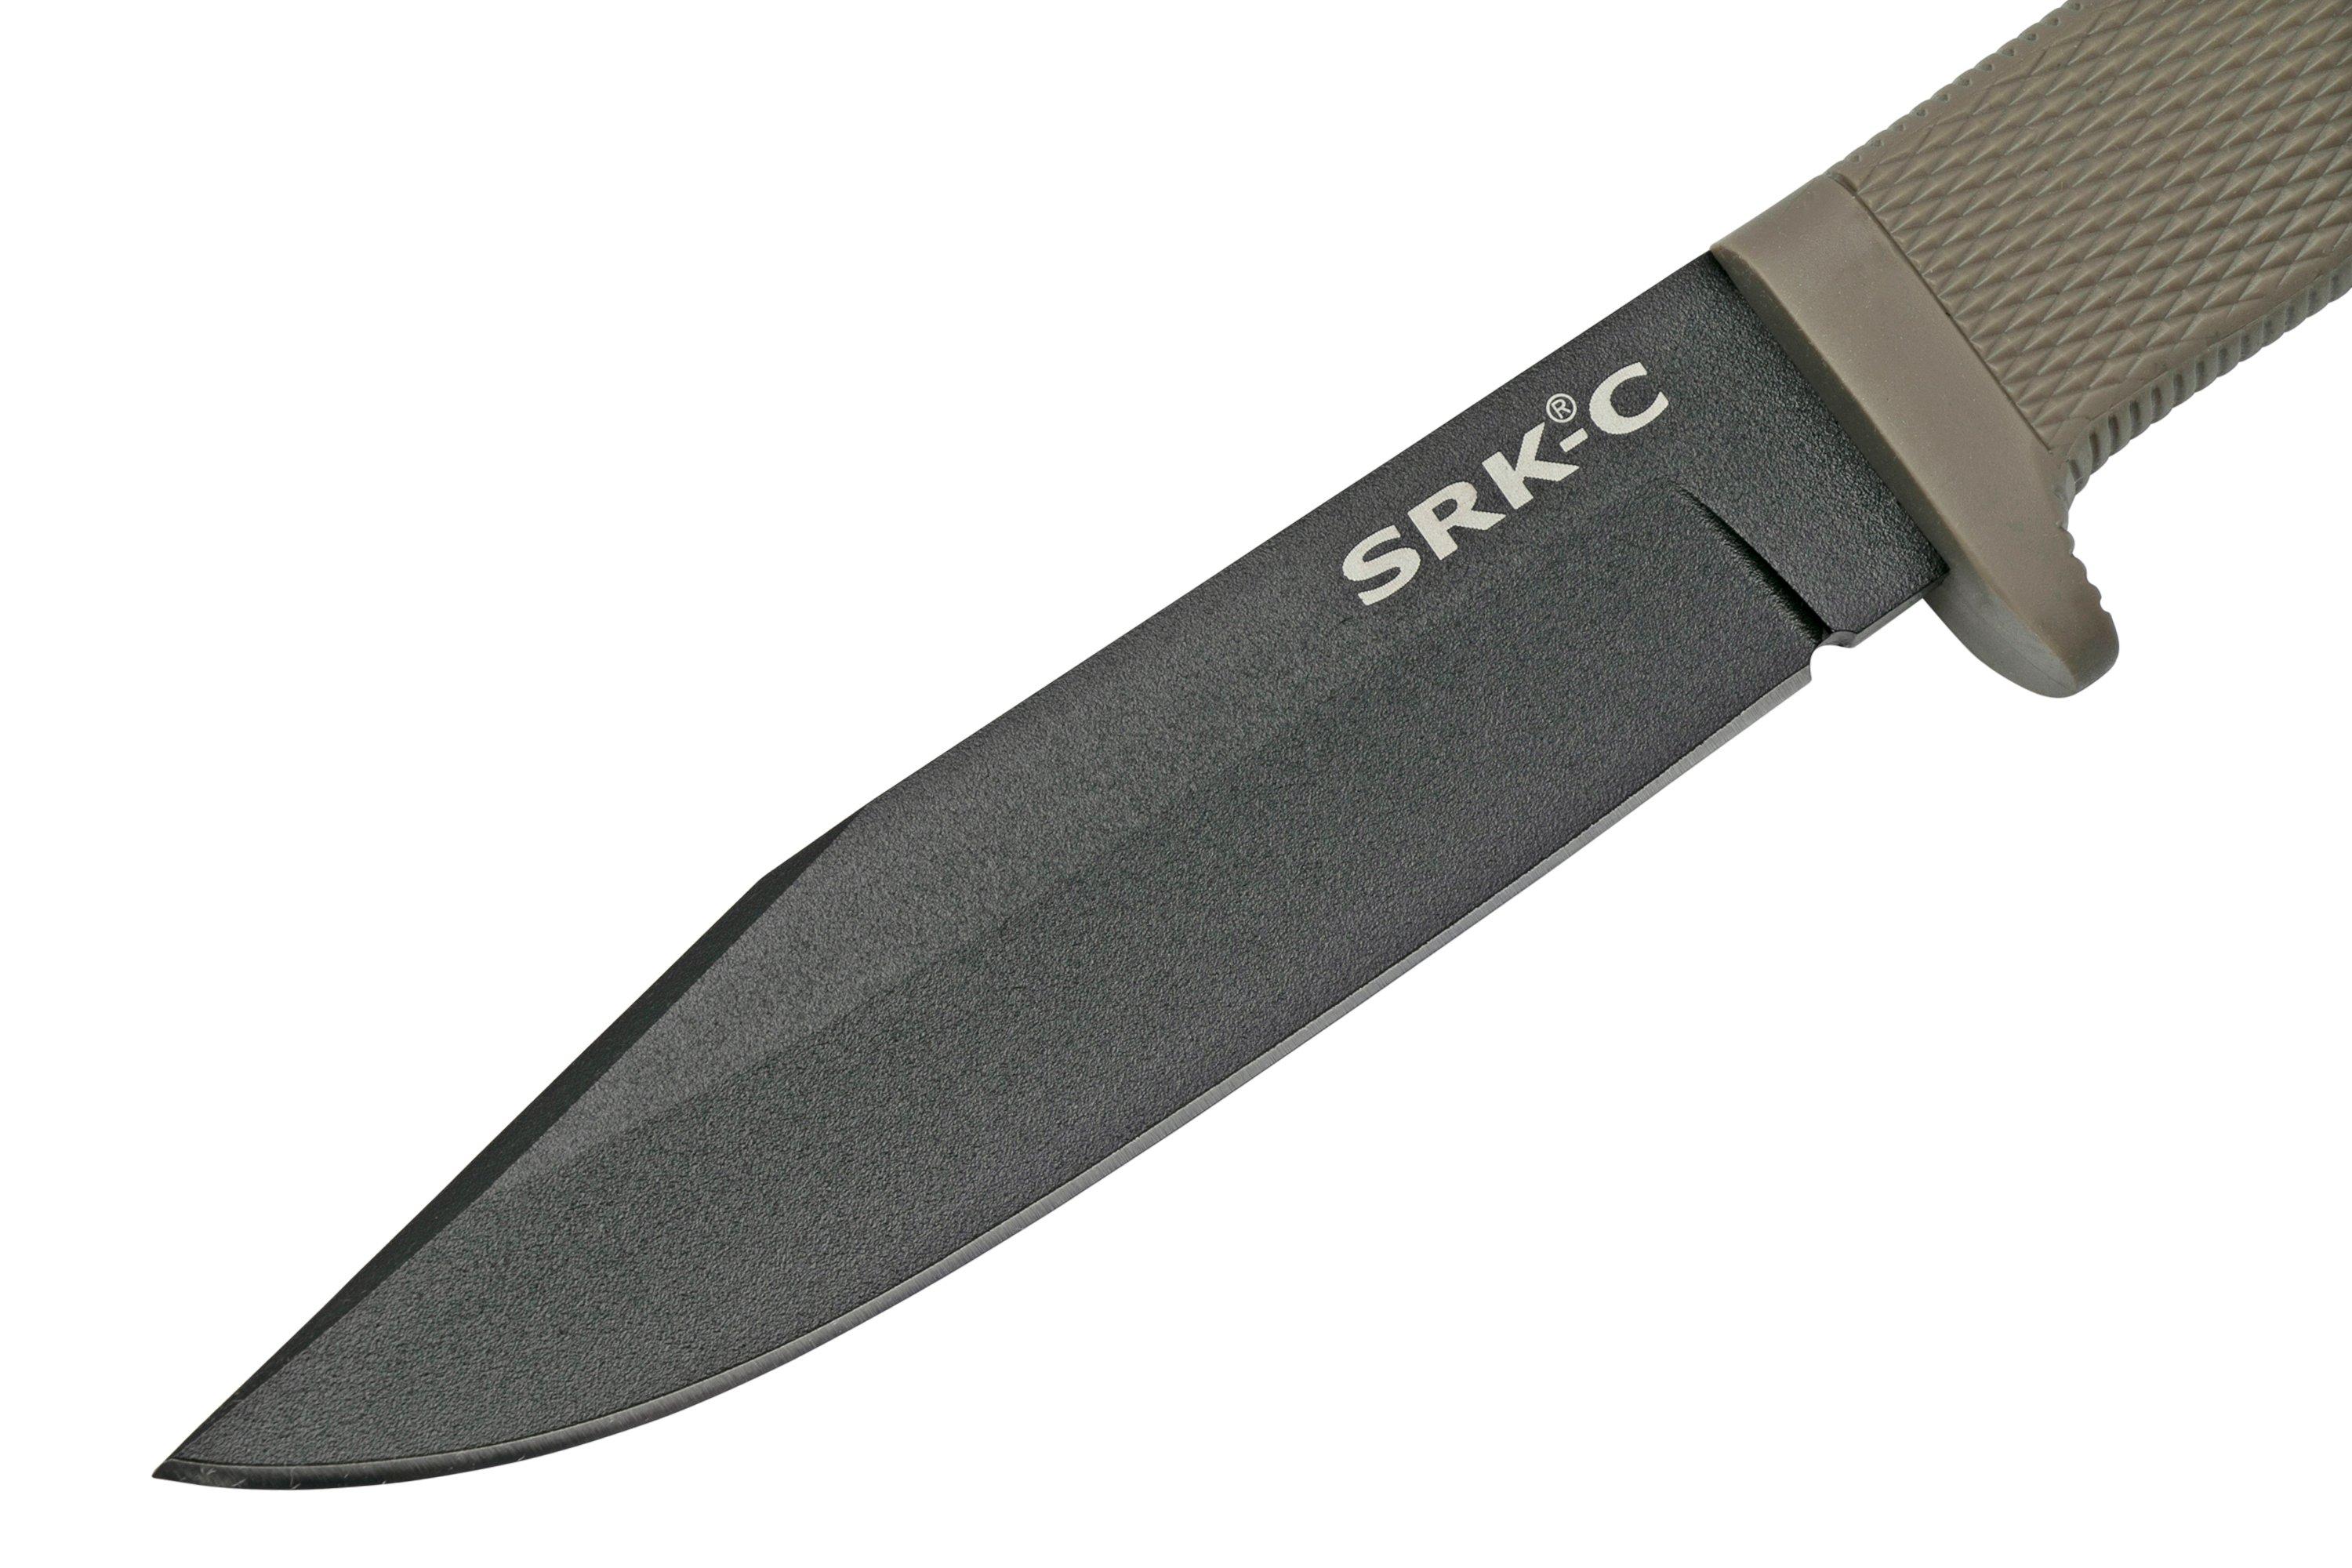 Cold Steel SRK Compact 49LCKDDEBK, Dark Earth, survival knife